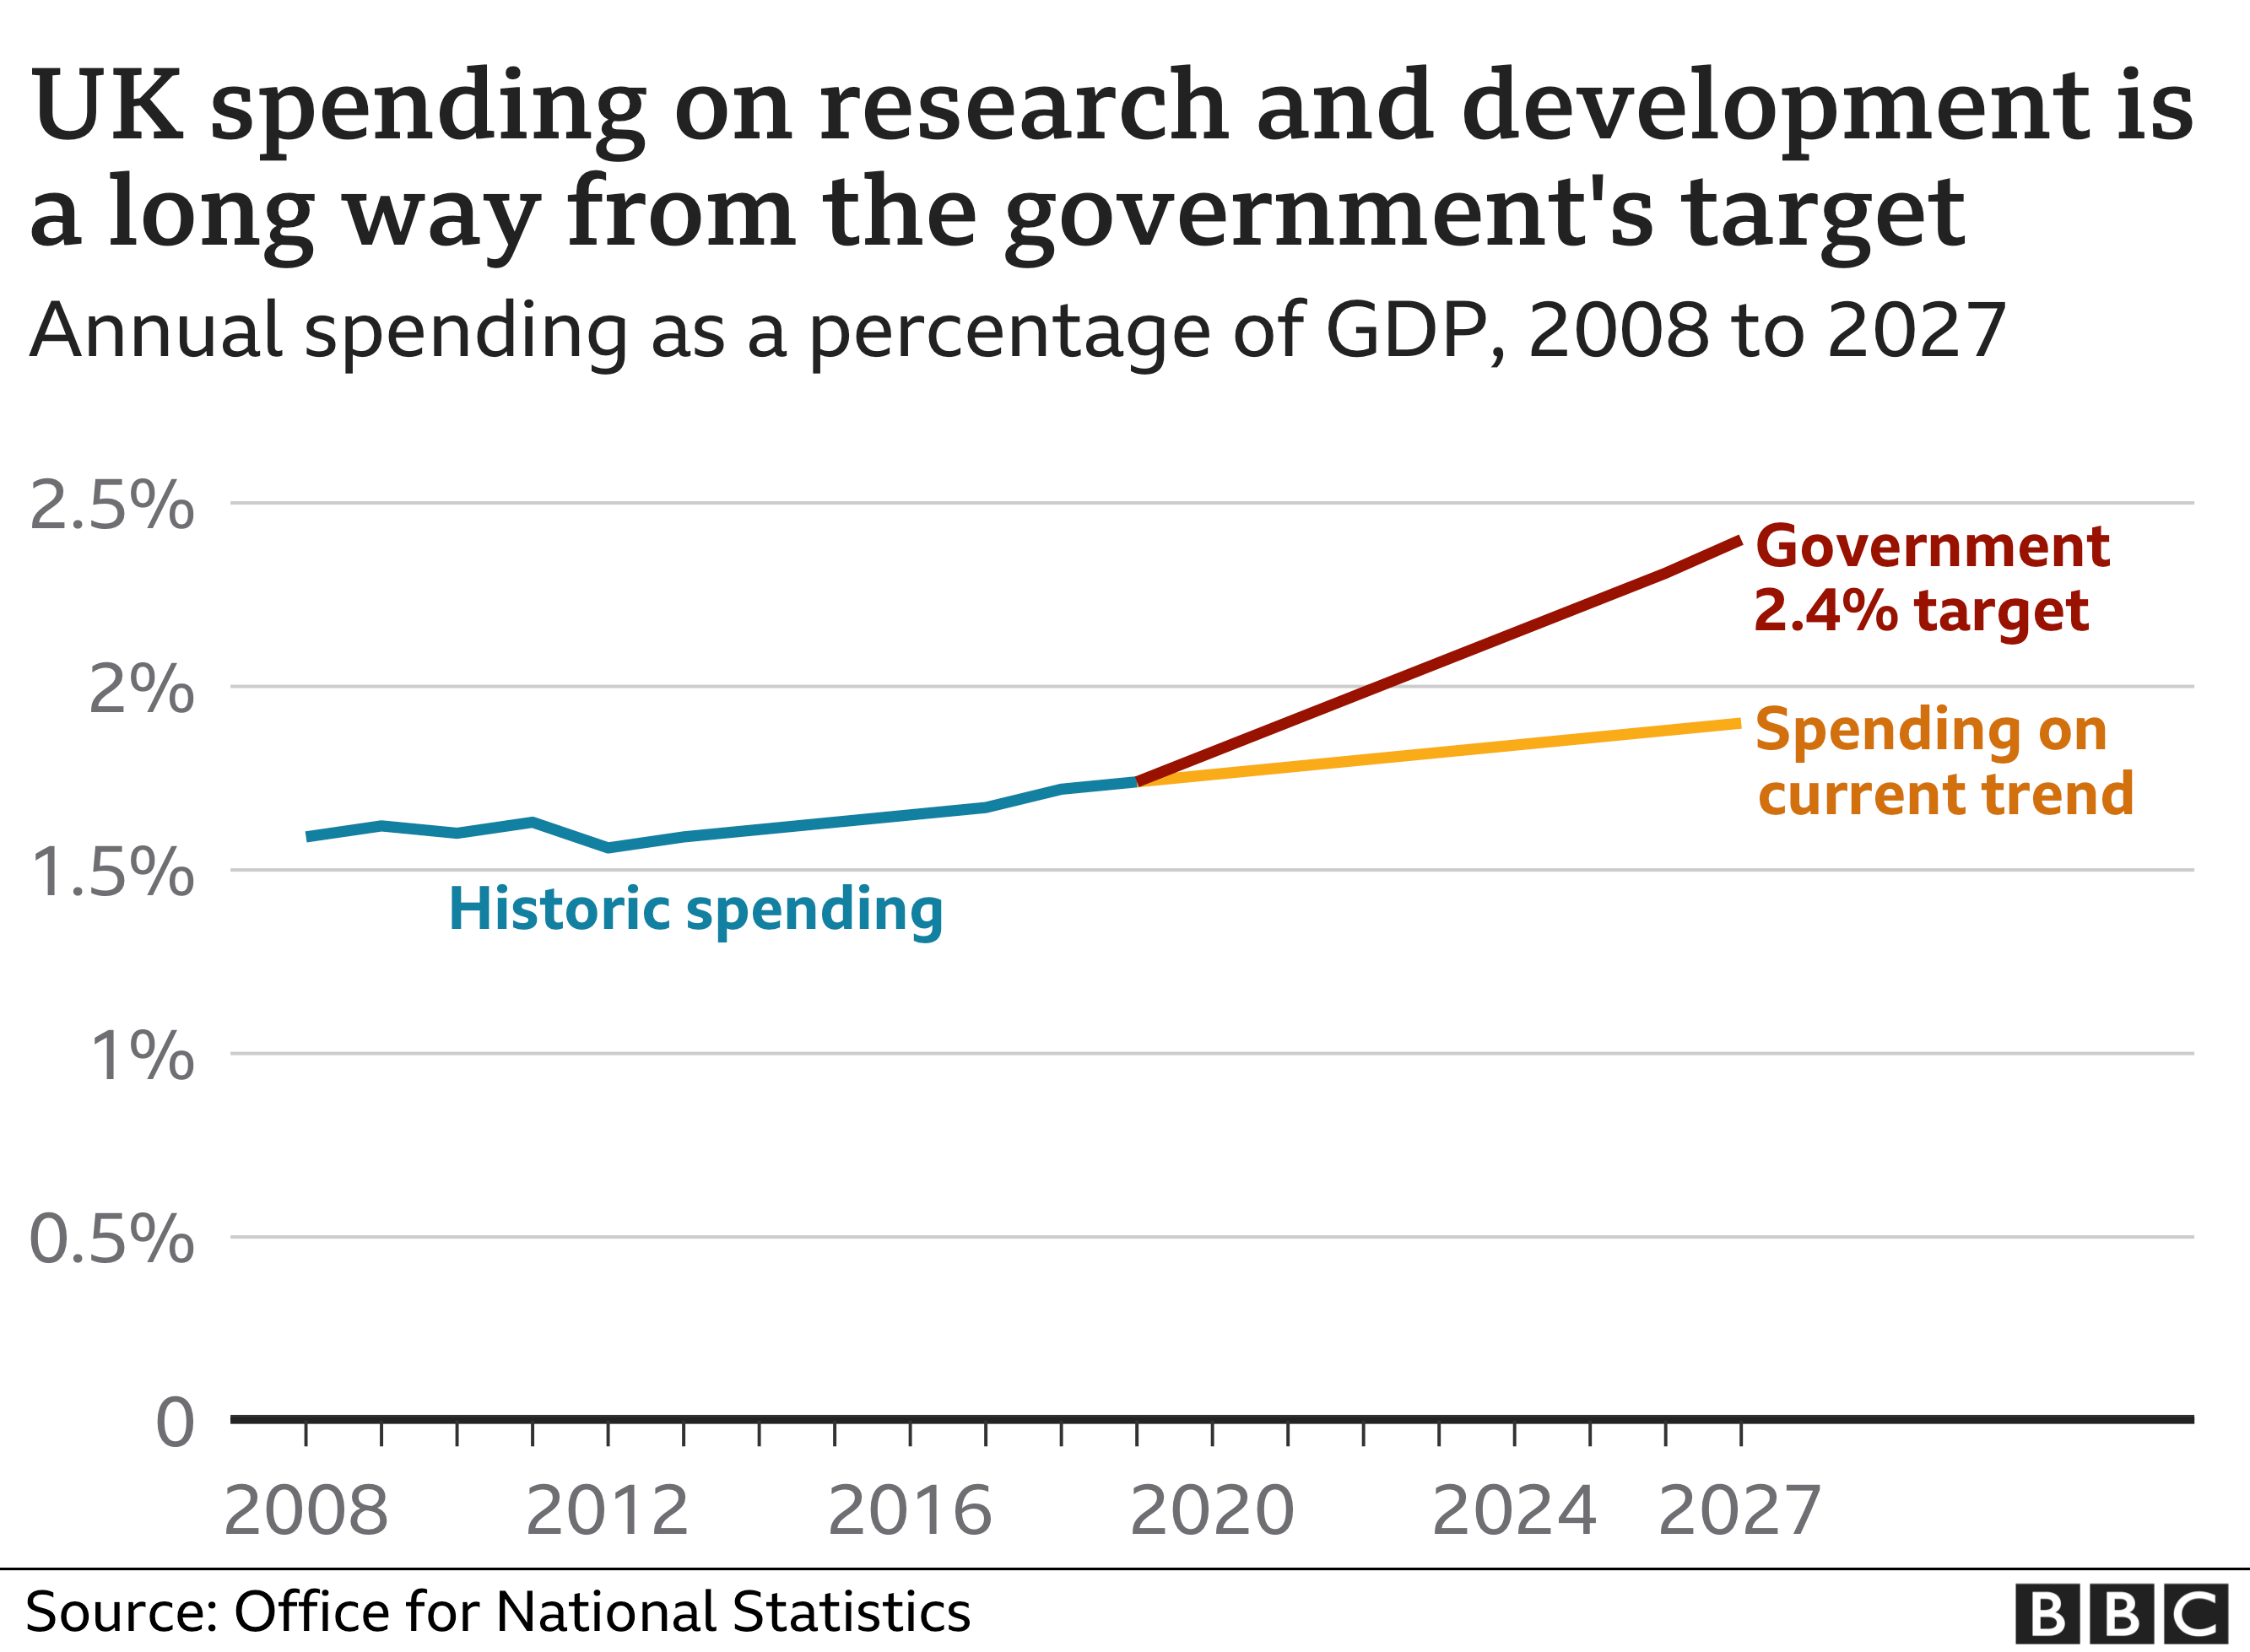 UK Research Spending